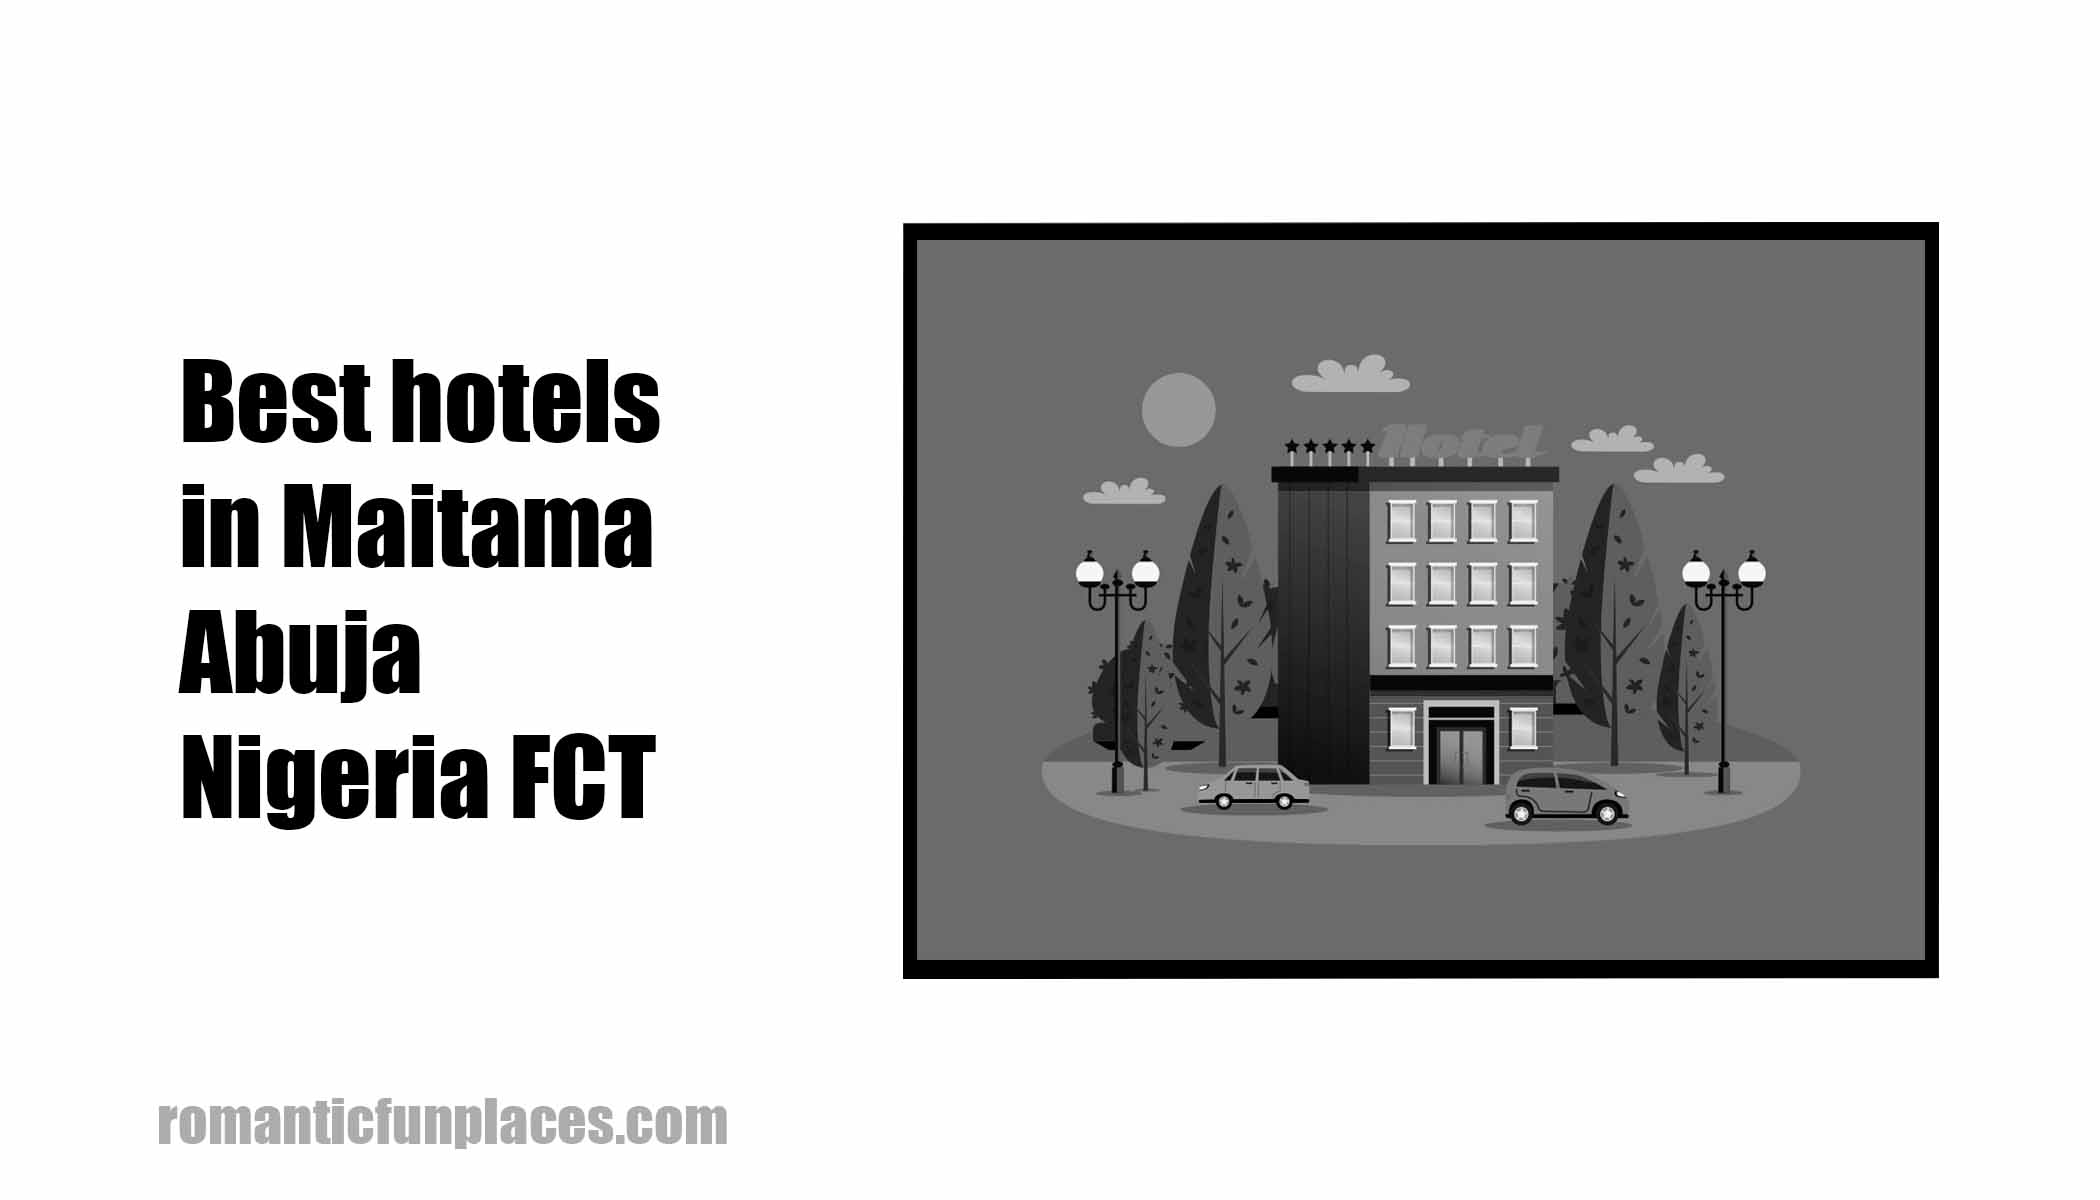 15 Best hotels in Maitama Abuja Nigeria FCT